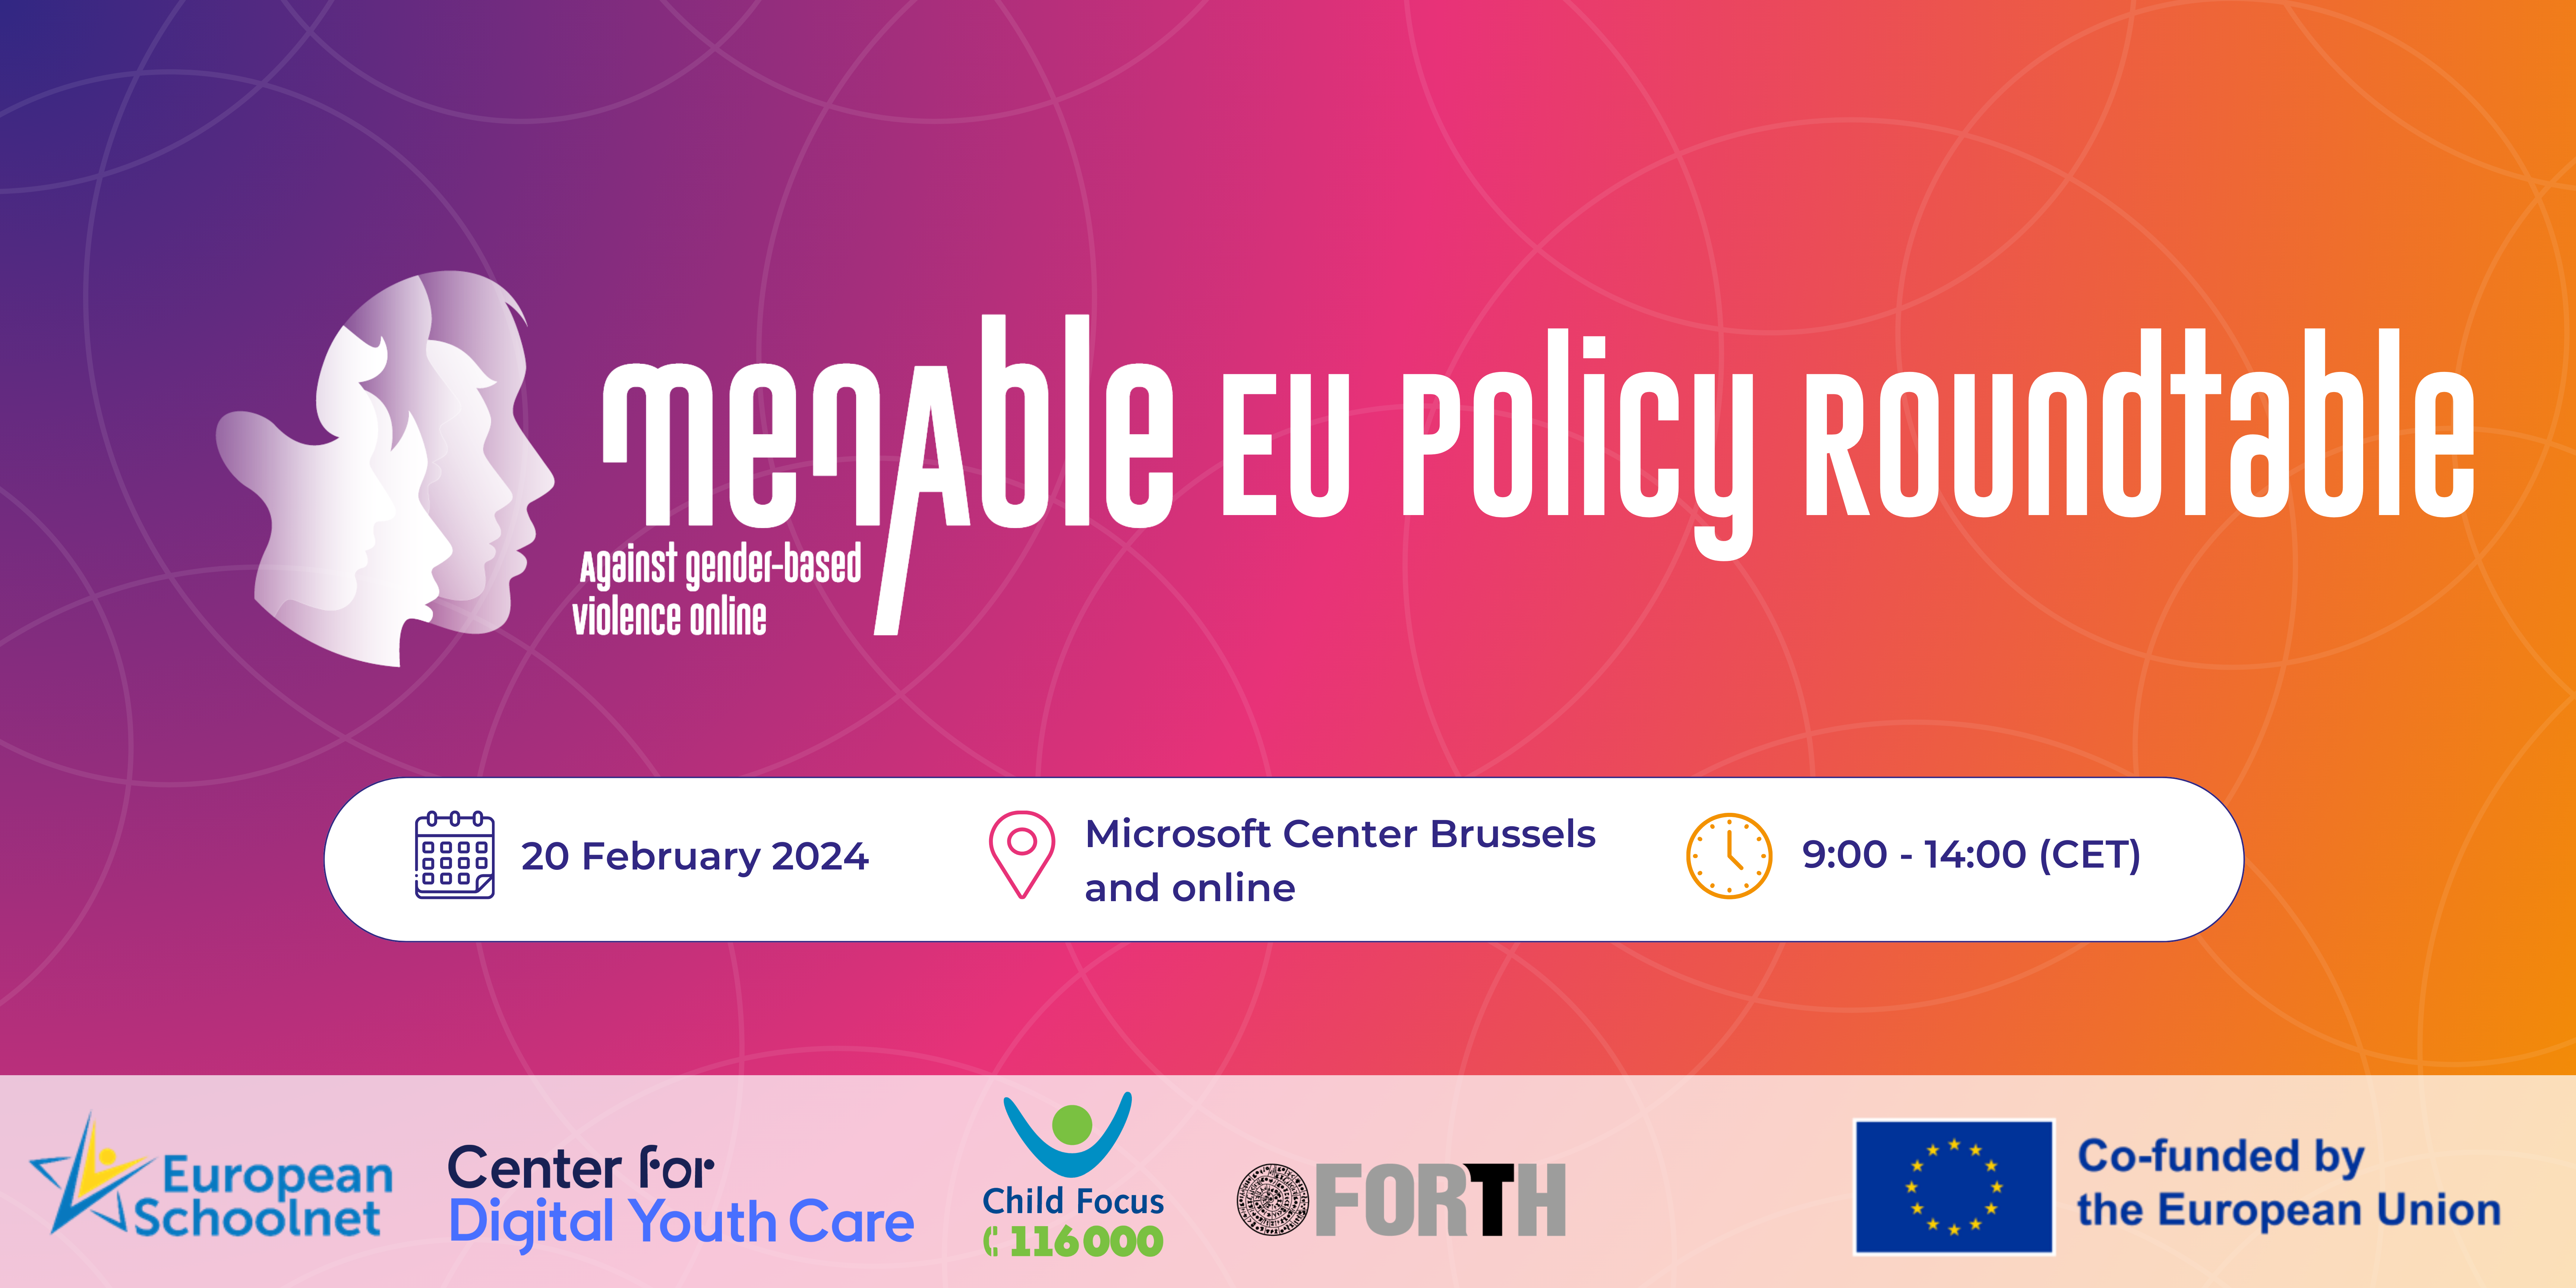 EU Policy Roundtable on combatting gender-based violence online